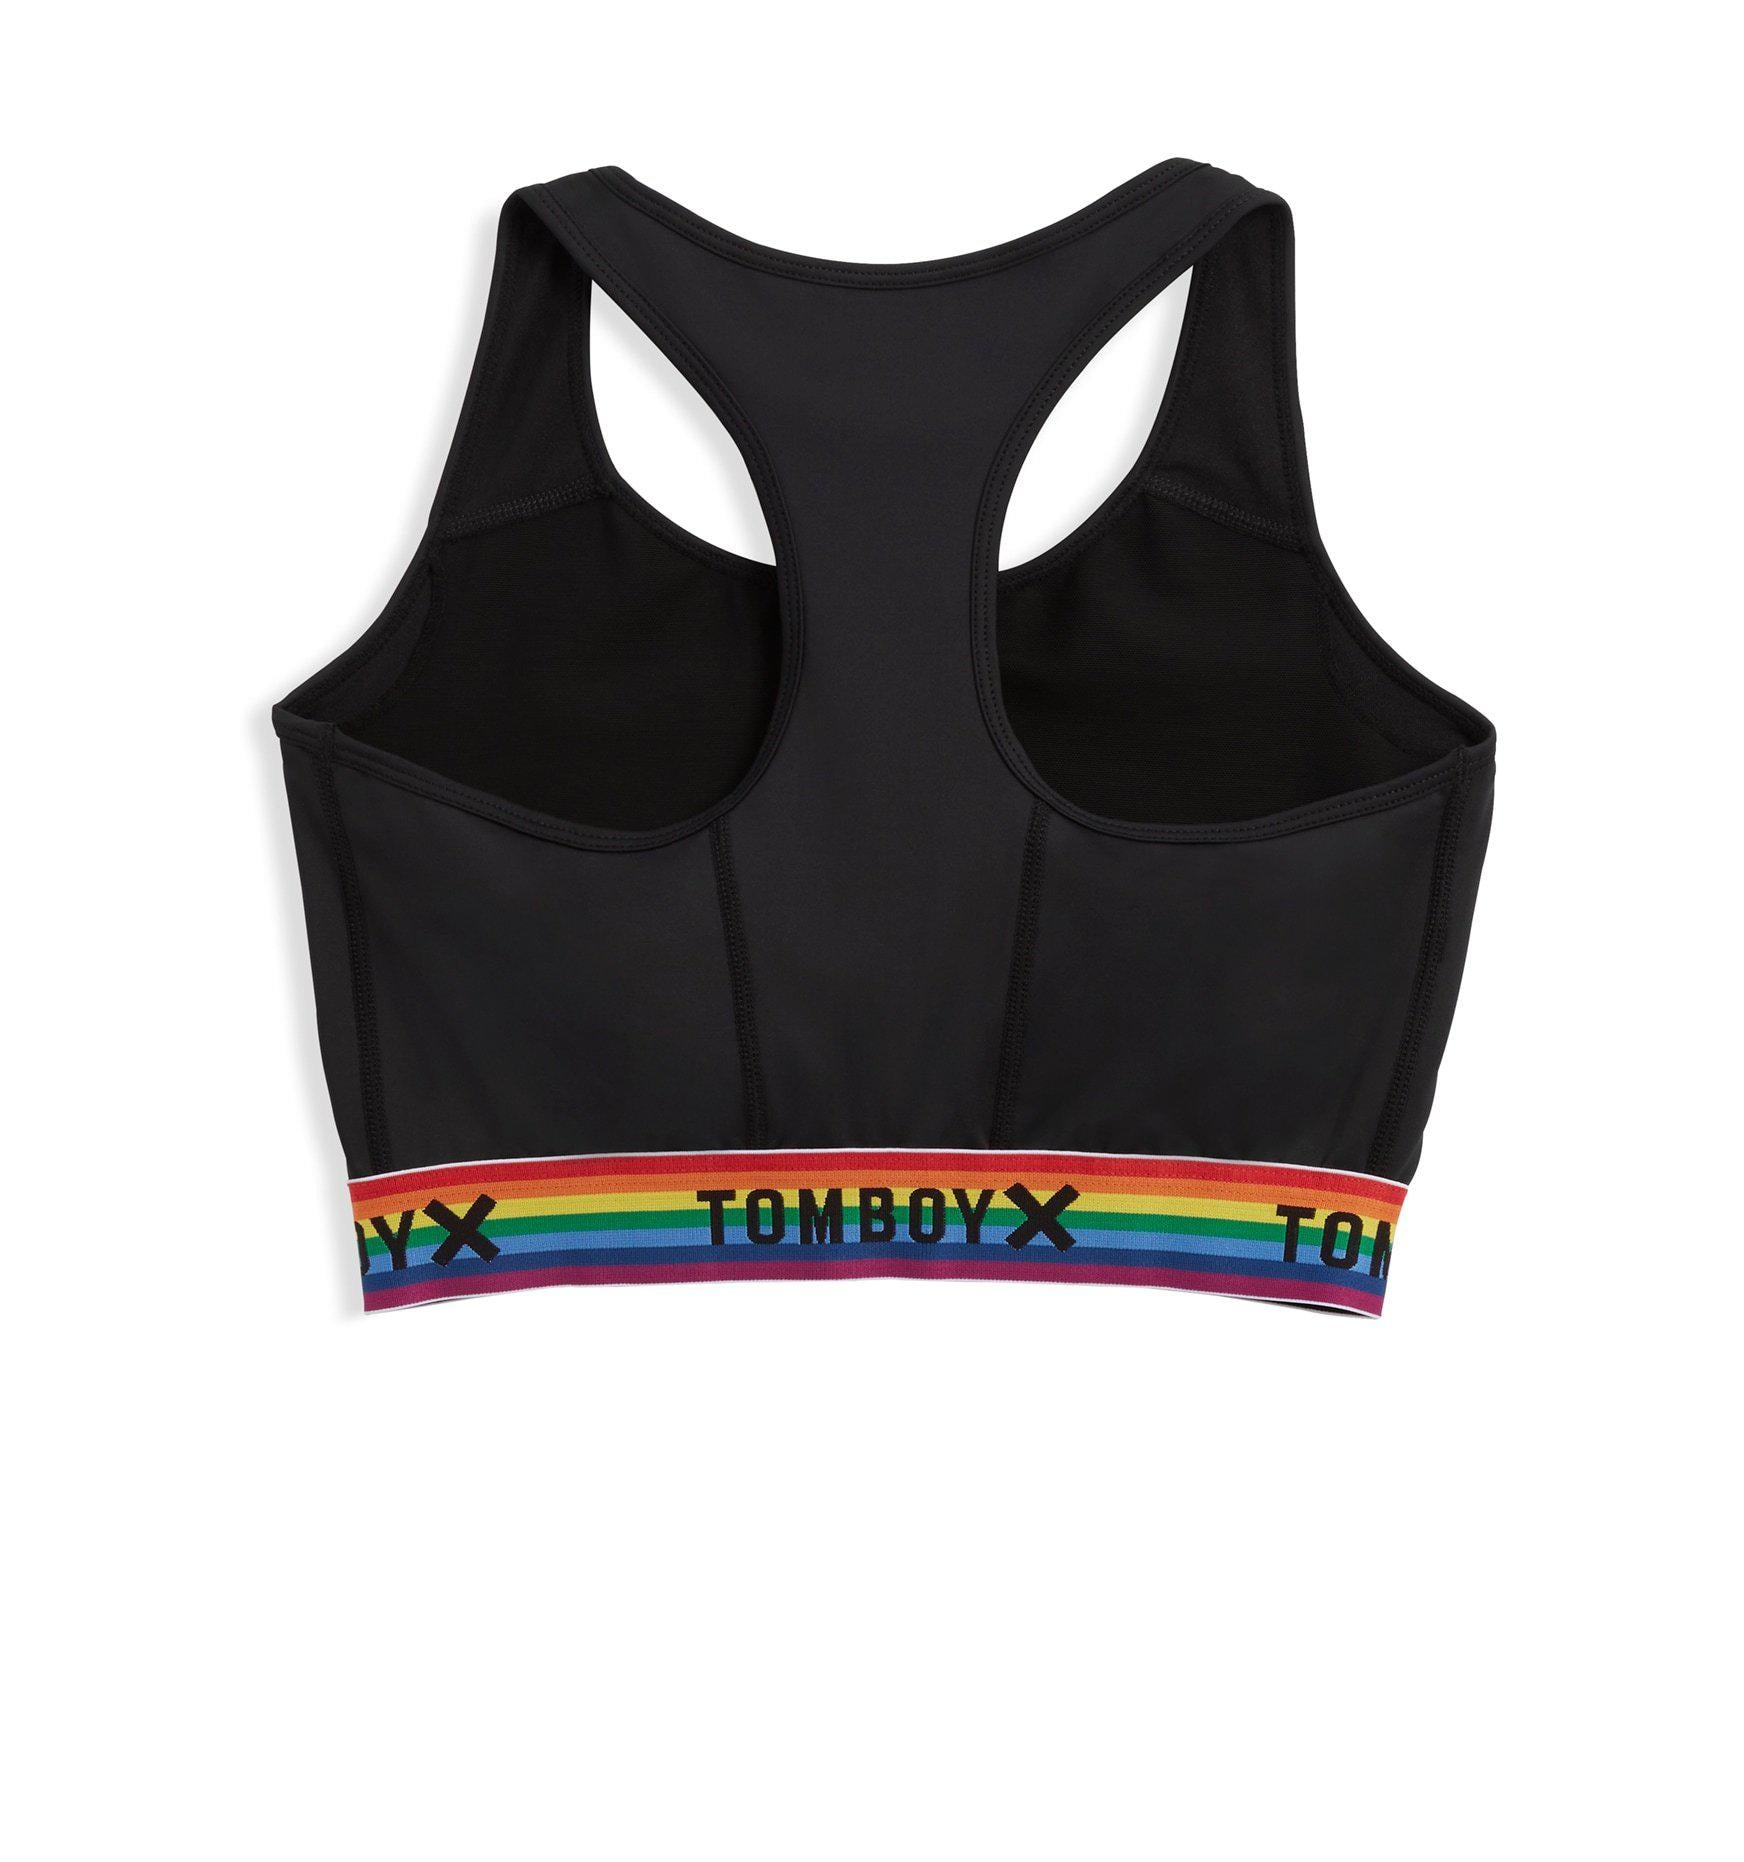 Tomboy X 2x Sports Bra Black Rainbow Band Wireless Pullover - $22 - From  Samantha